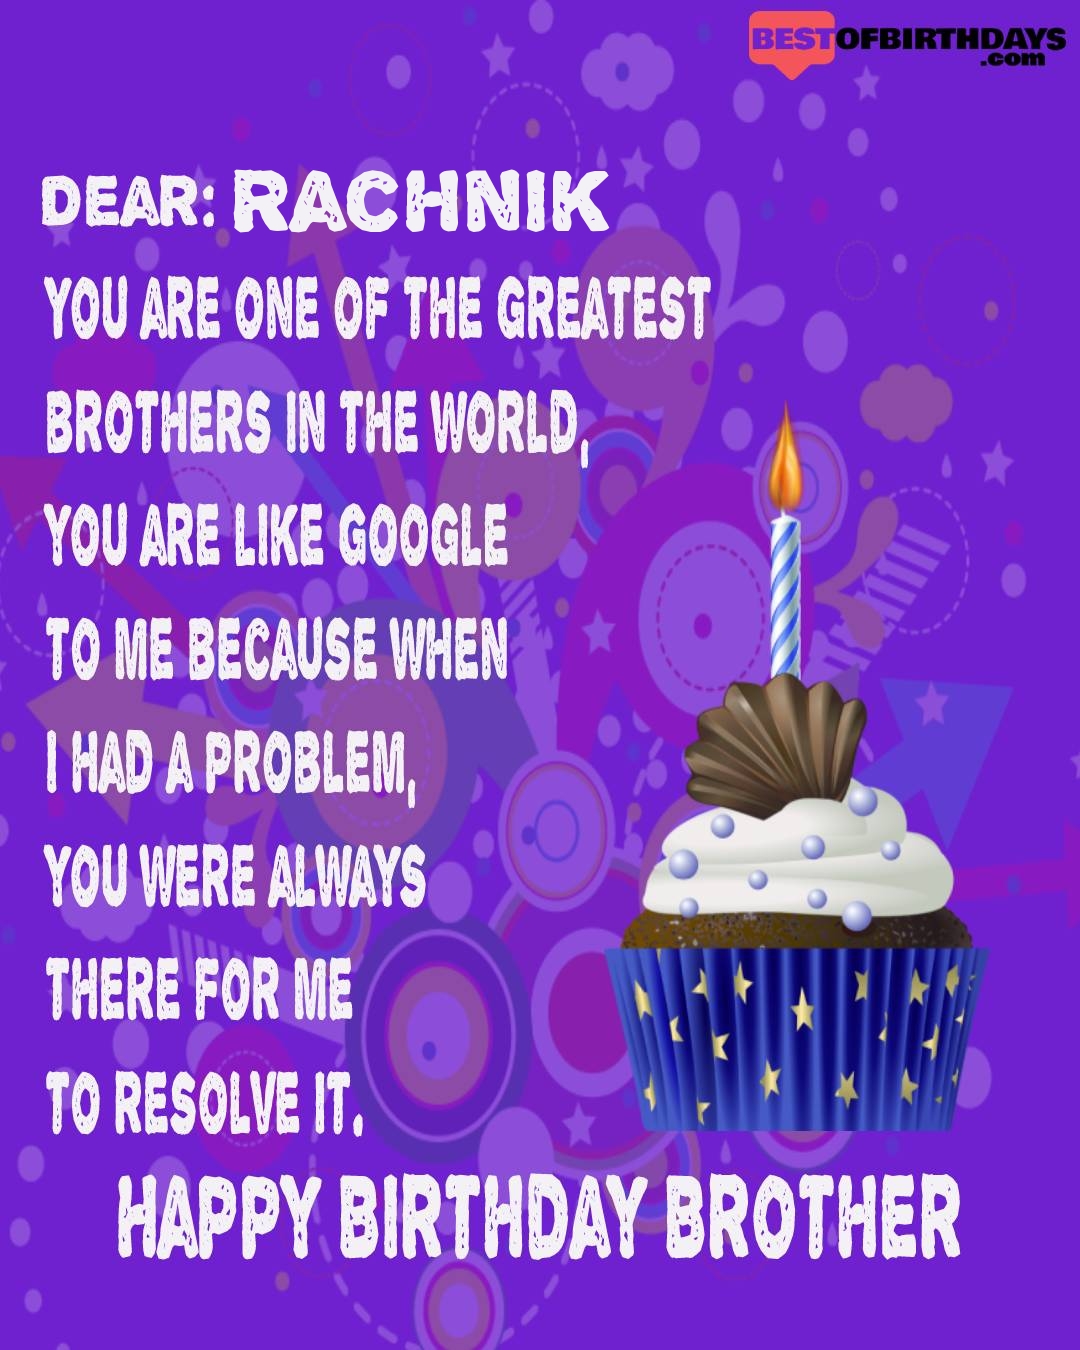 Happy birthday rachnik bhai brother bro